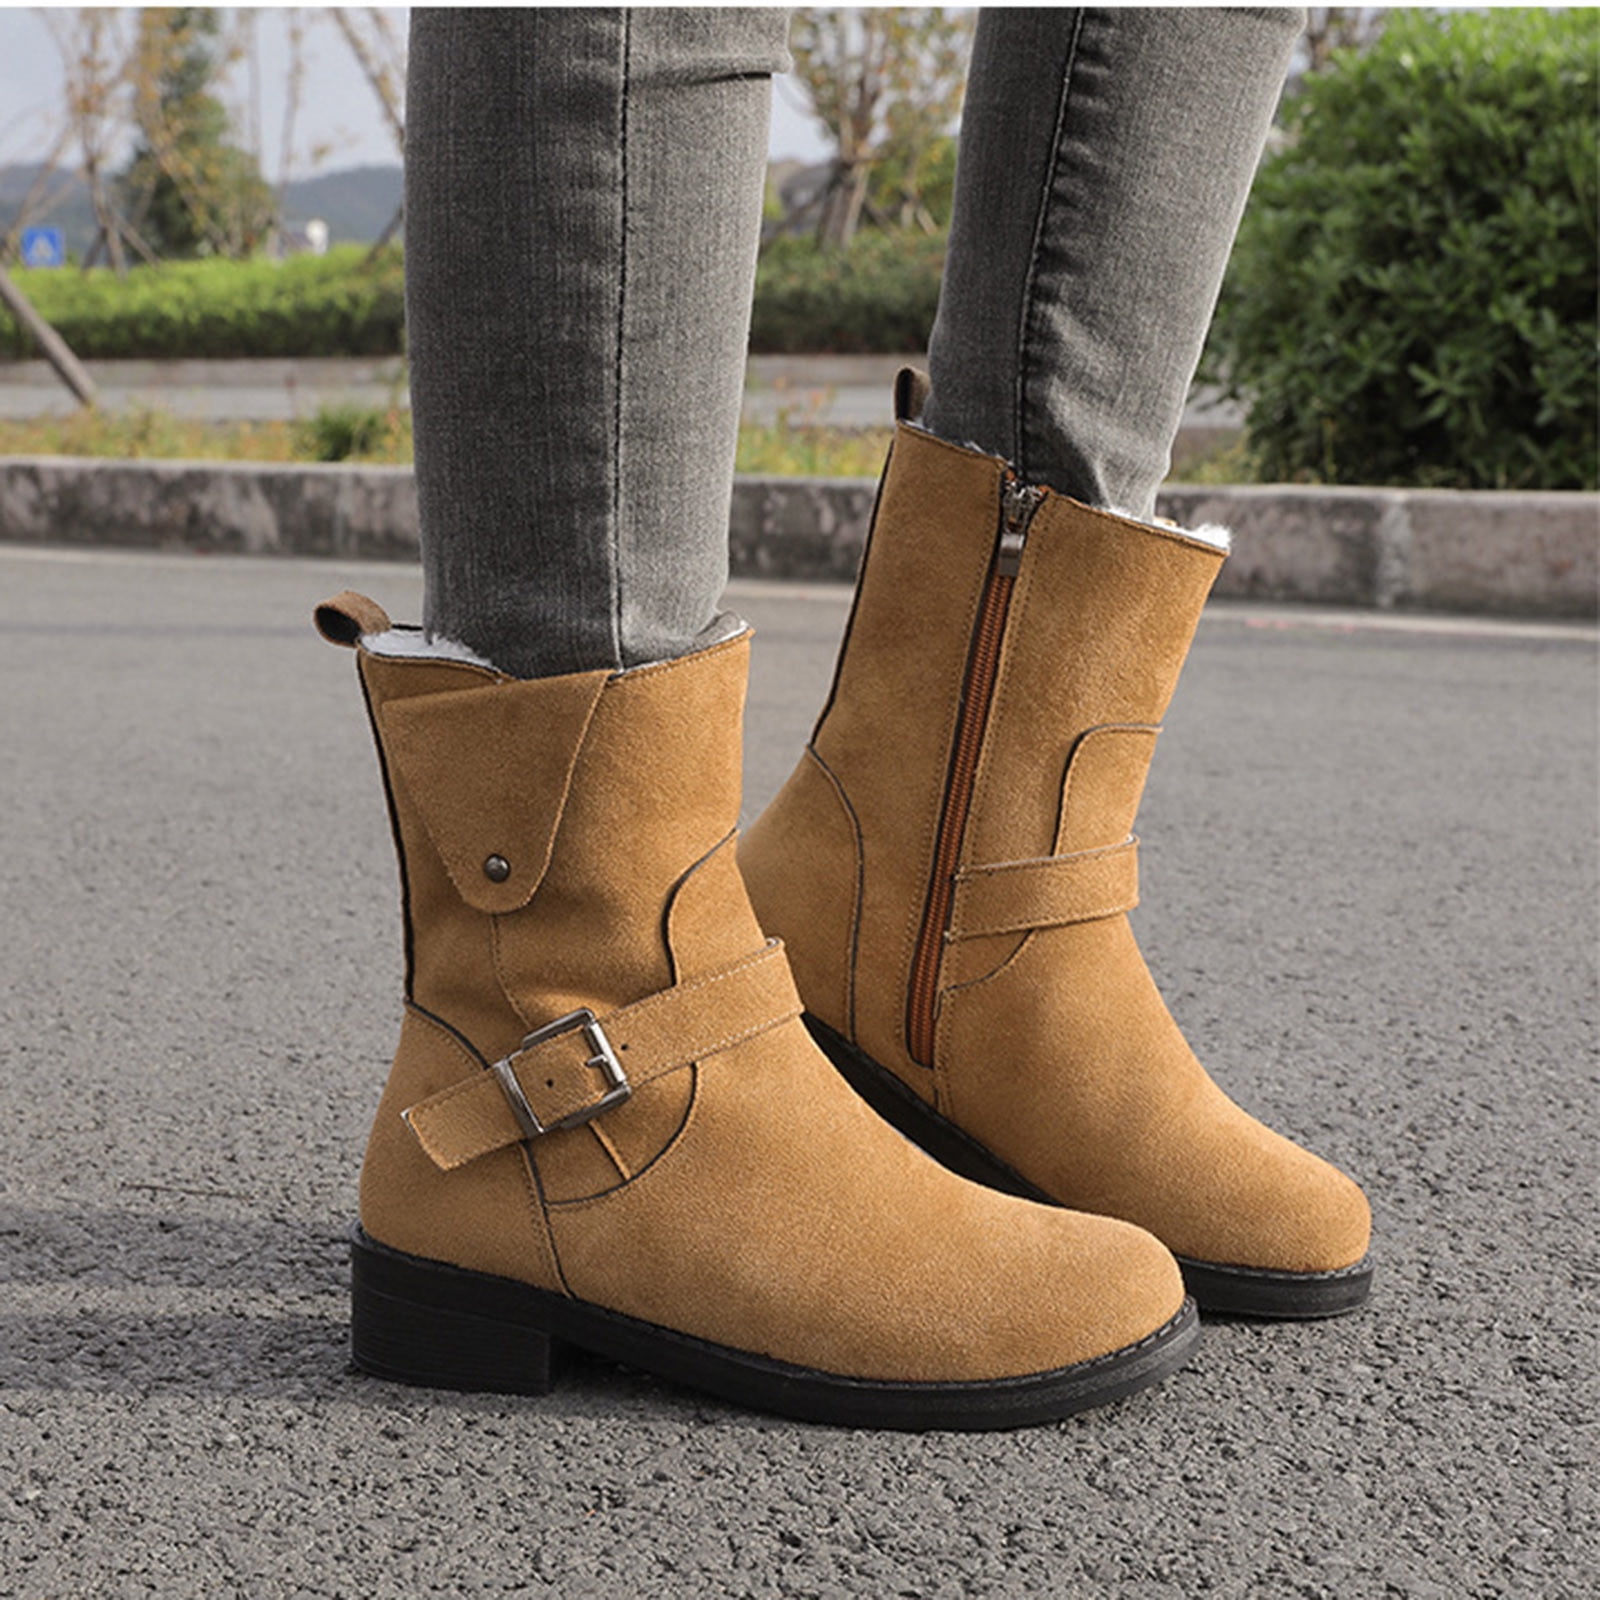 Juebong Boots Deals Outdoor Shoes Women Dressy Western Booties ...